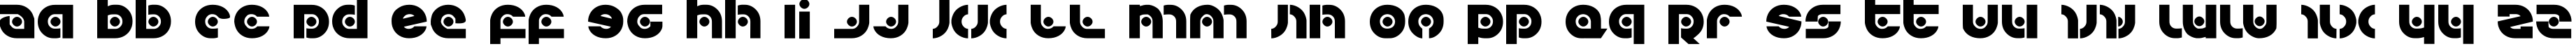 Пример написания английского алфавита шрифтом Kovacs Spot